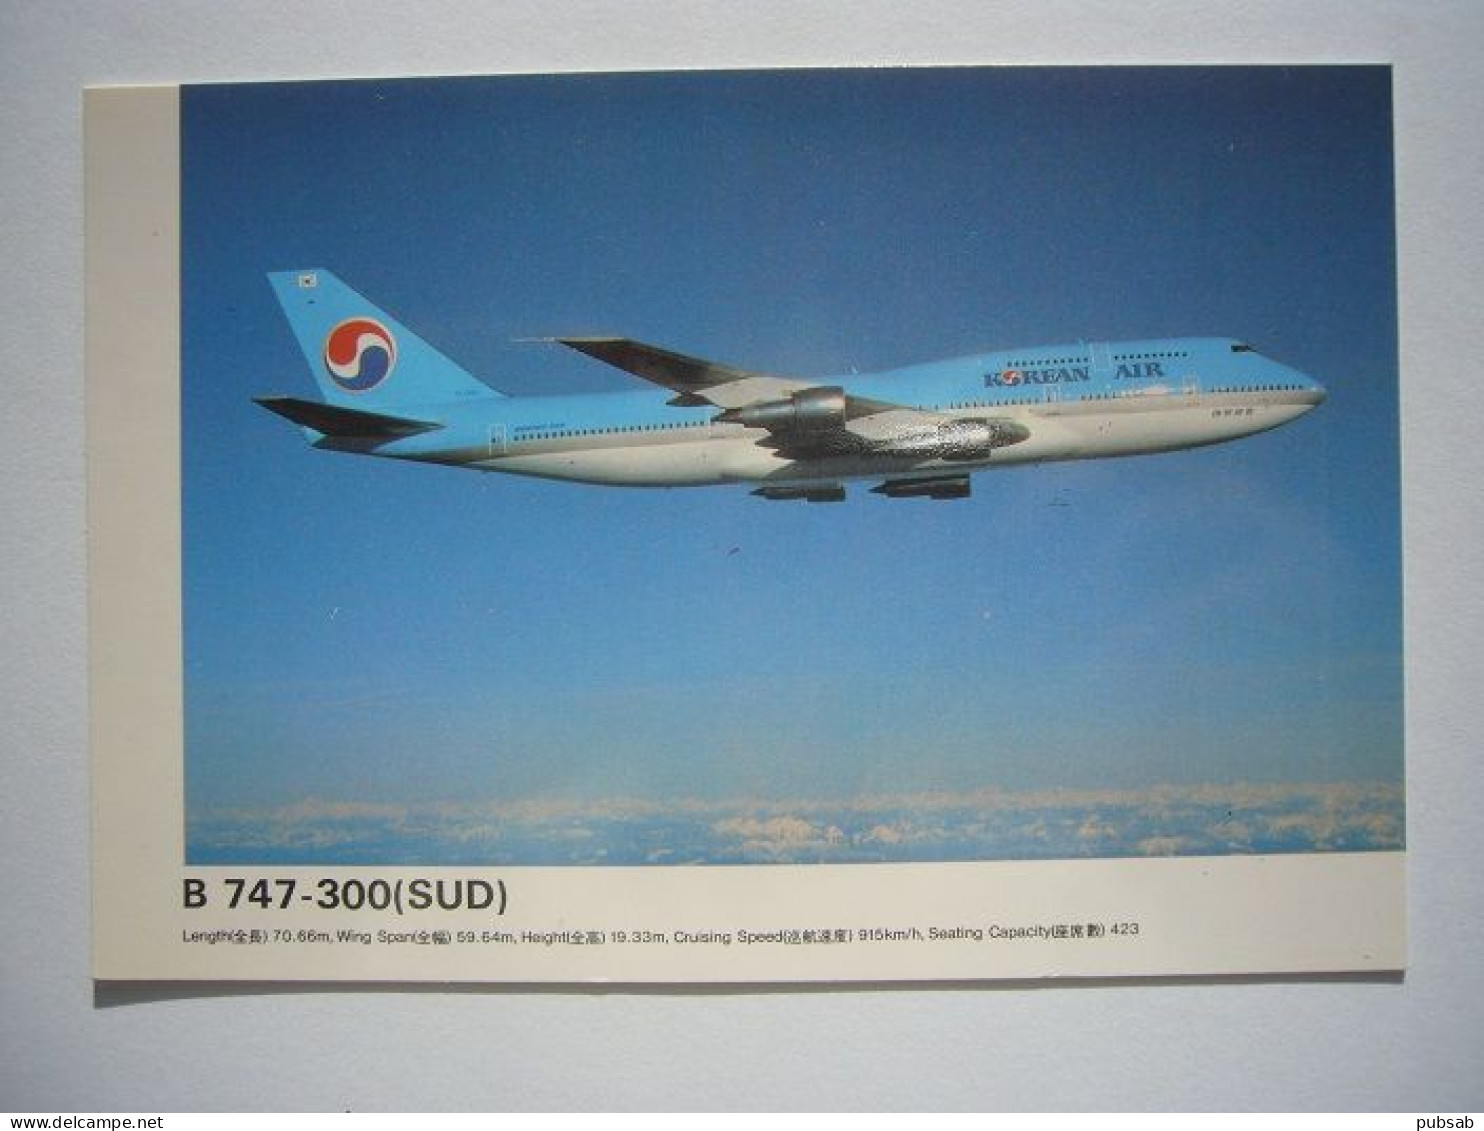 Avion / Airplane / KOREAN AIR / Boeing 747-300(SUD) / Airline Issue - 1946-....: Modern Era